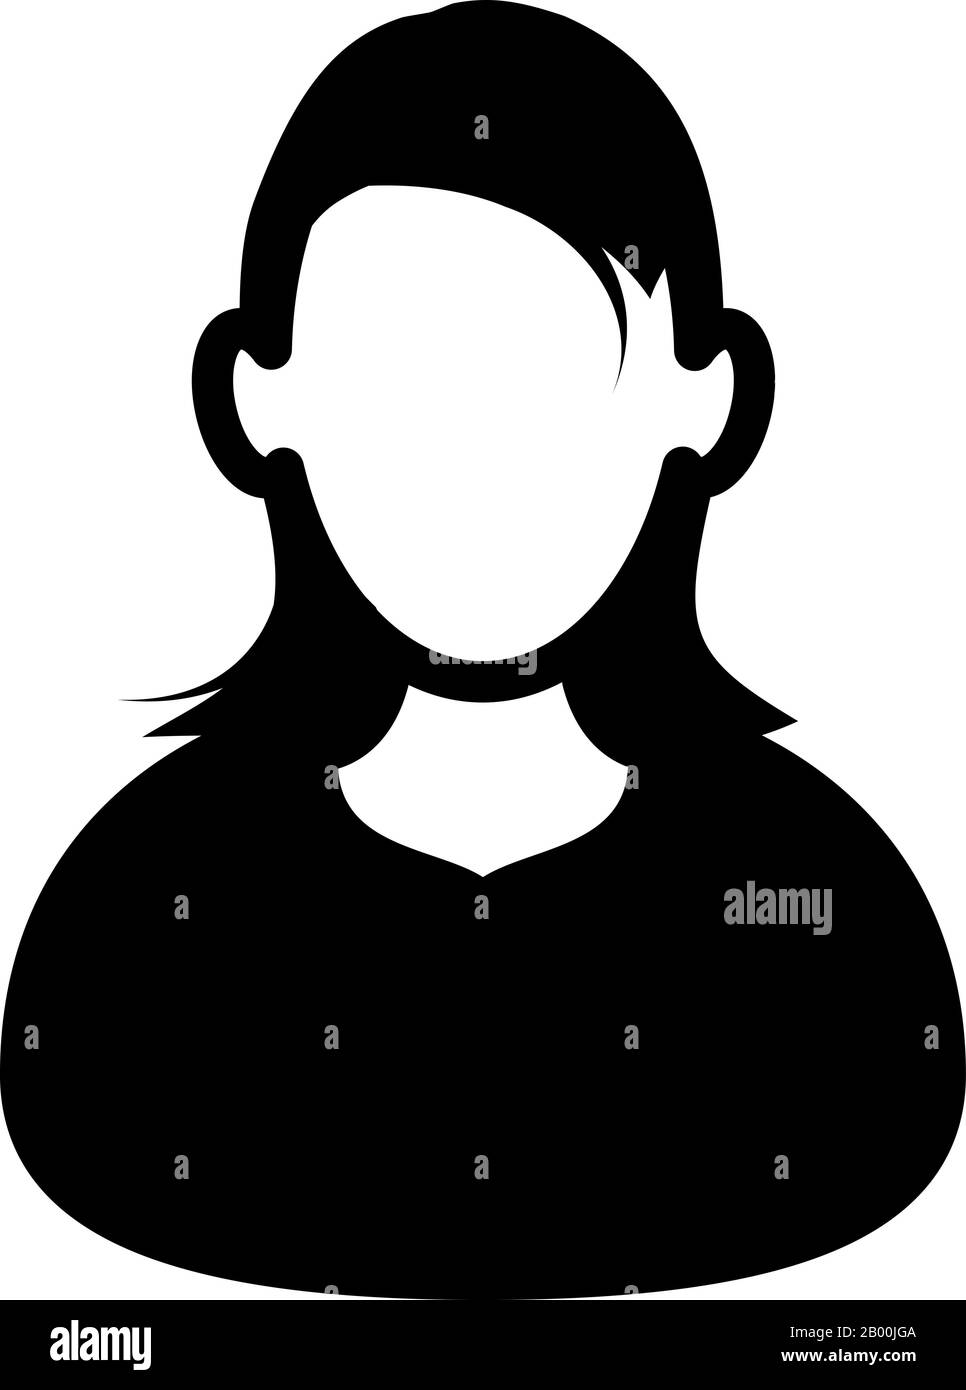 woman silhouette avatar icon or symbol vector illustration Stock Vector